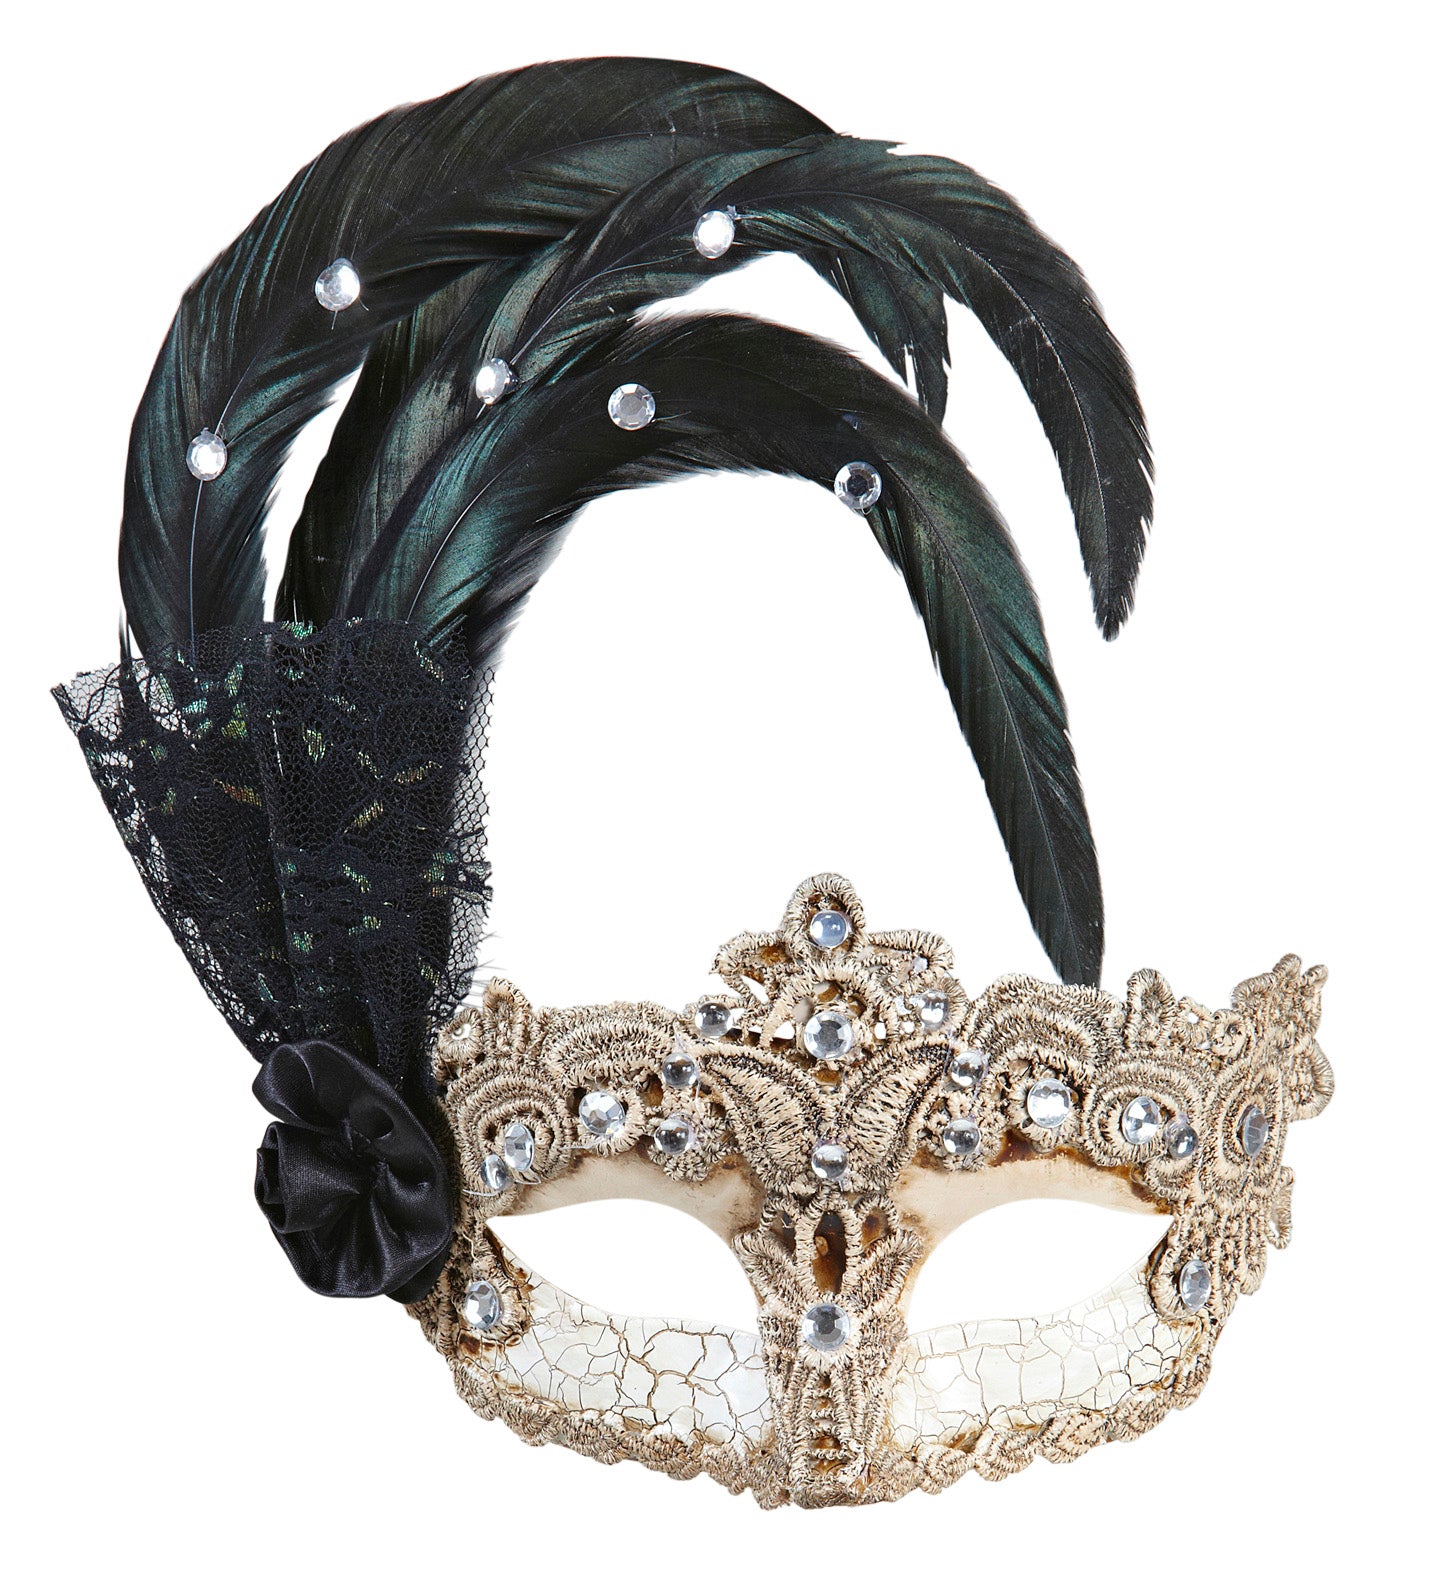 Grand Gala Macrame Mask with Feathers